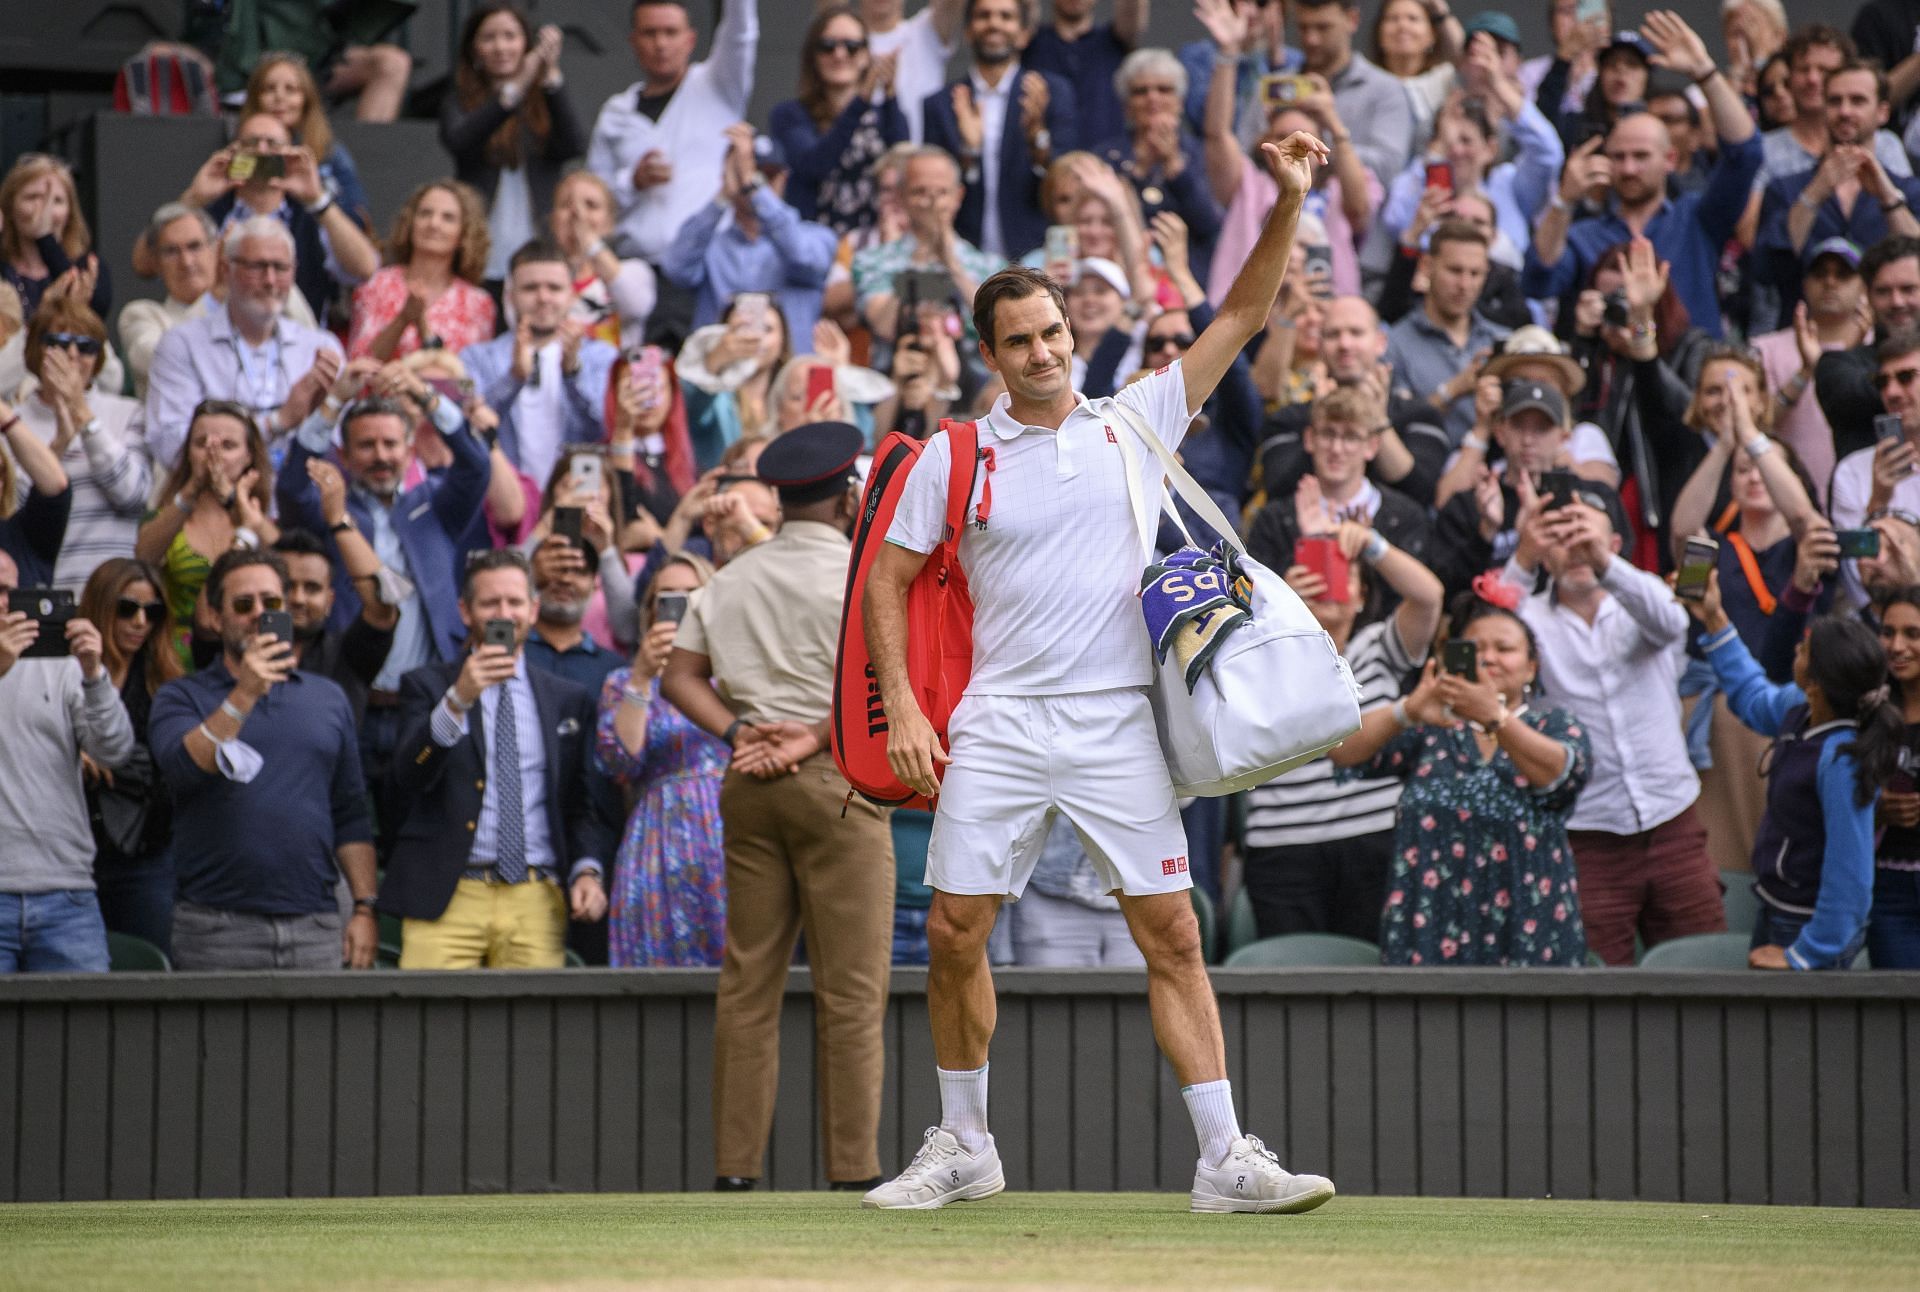 Roger Federer bidding goodbye to his fans at Wimbledon 2021